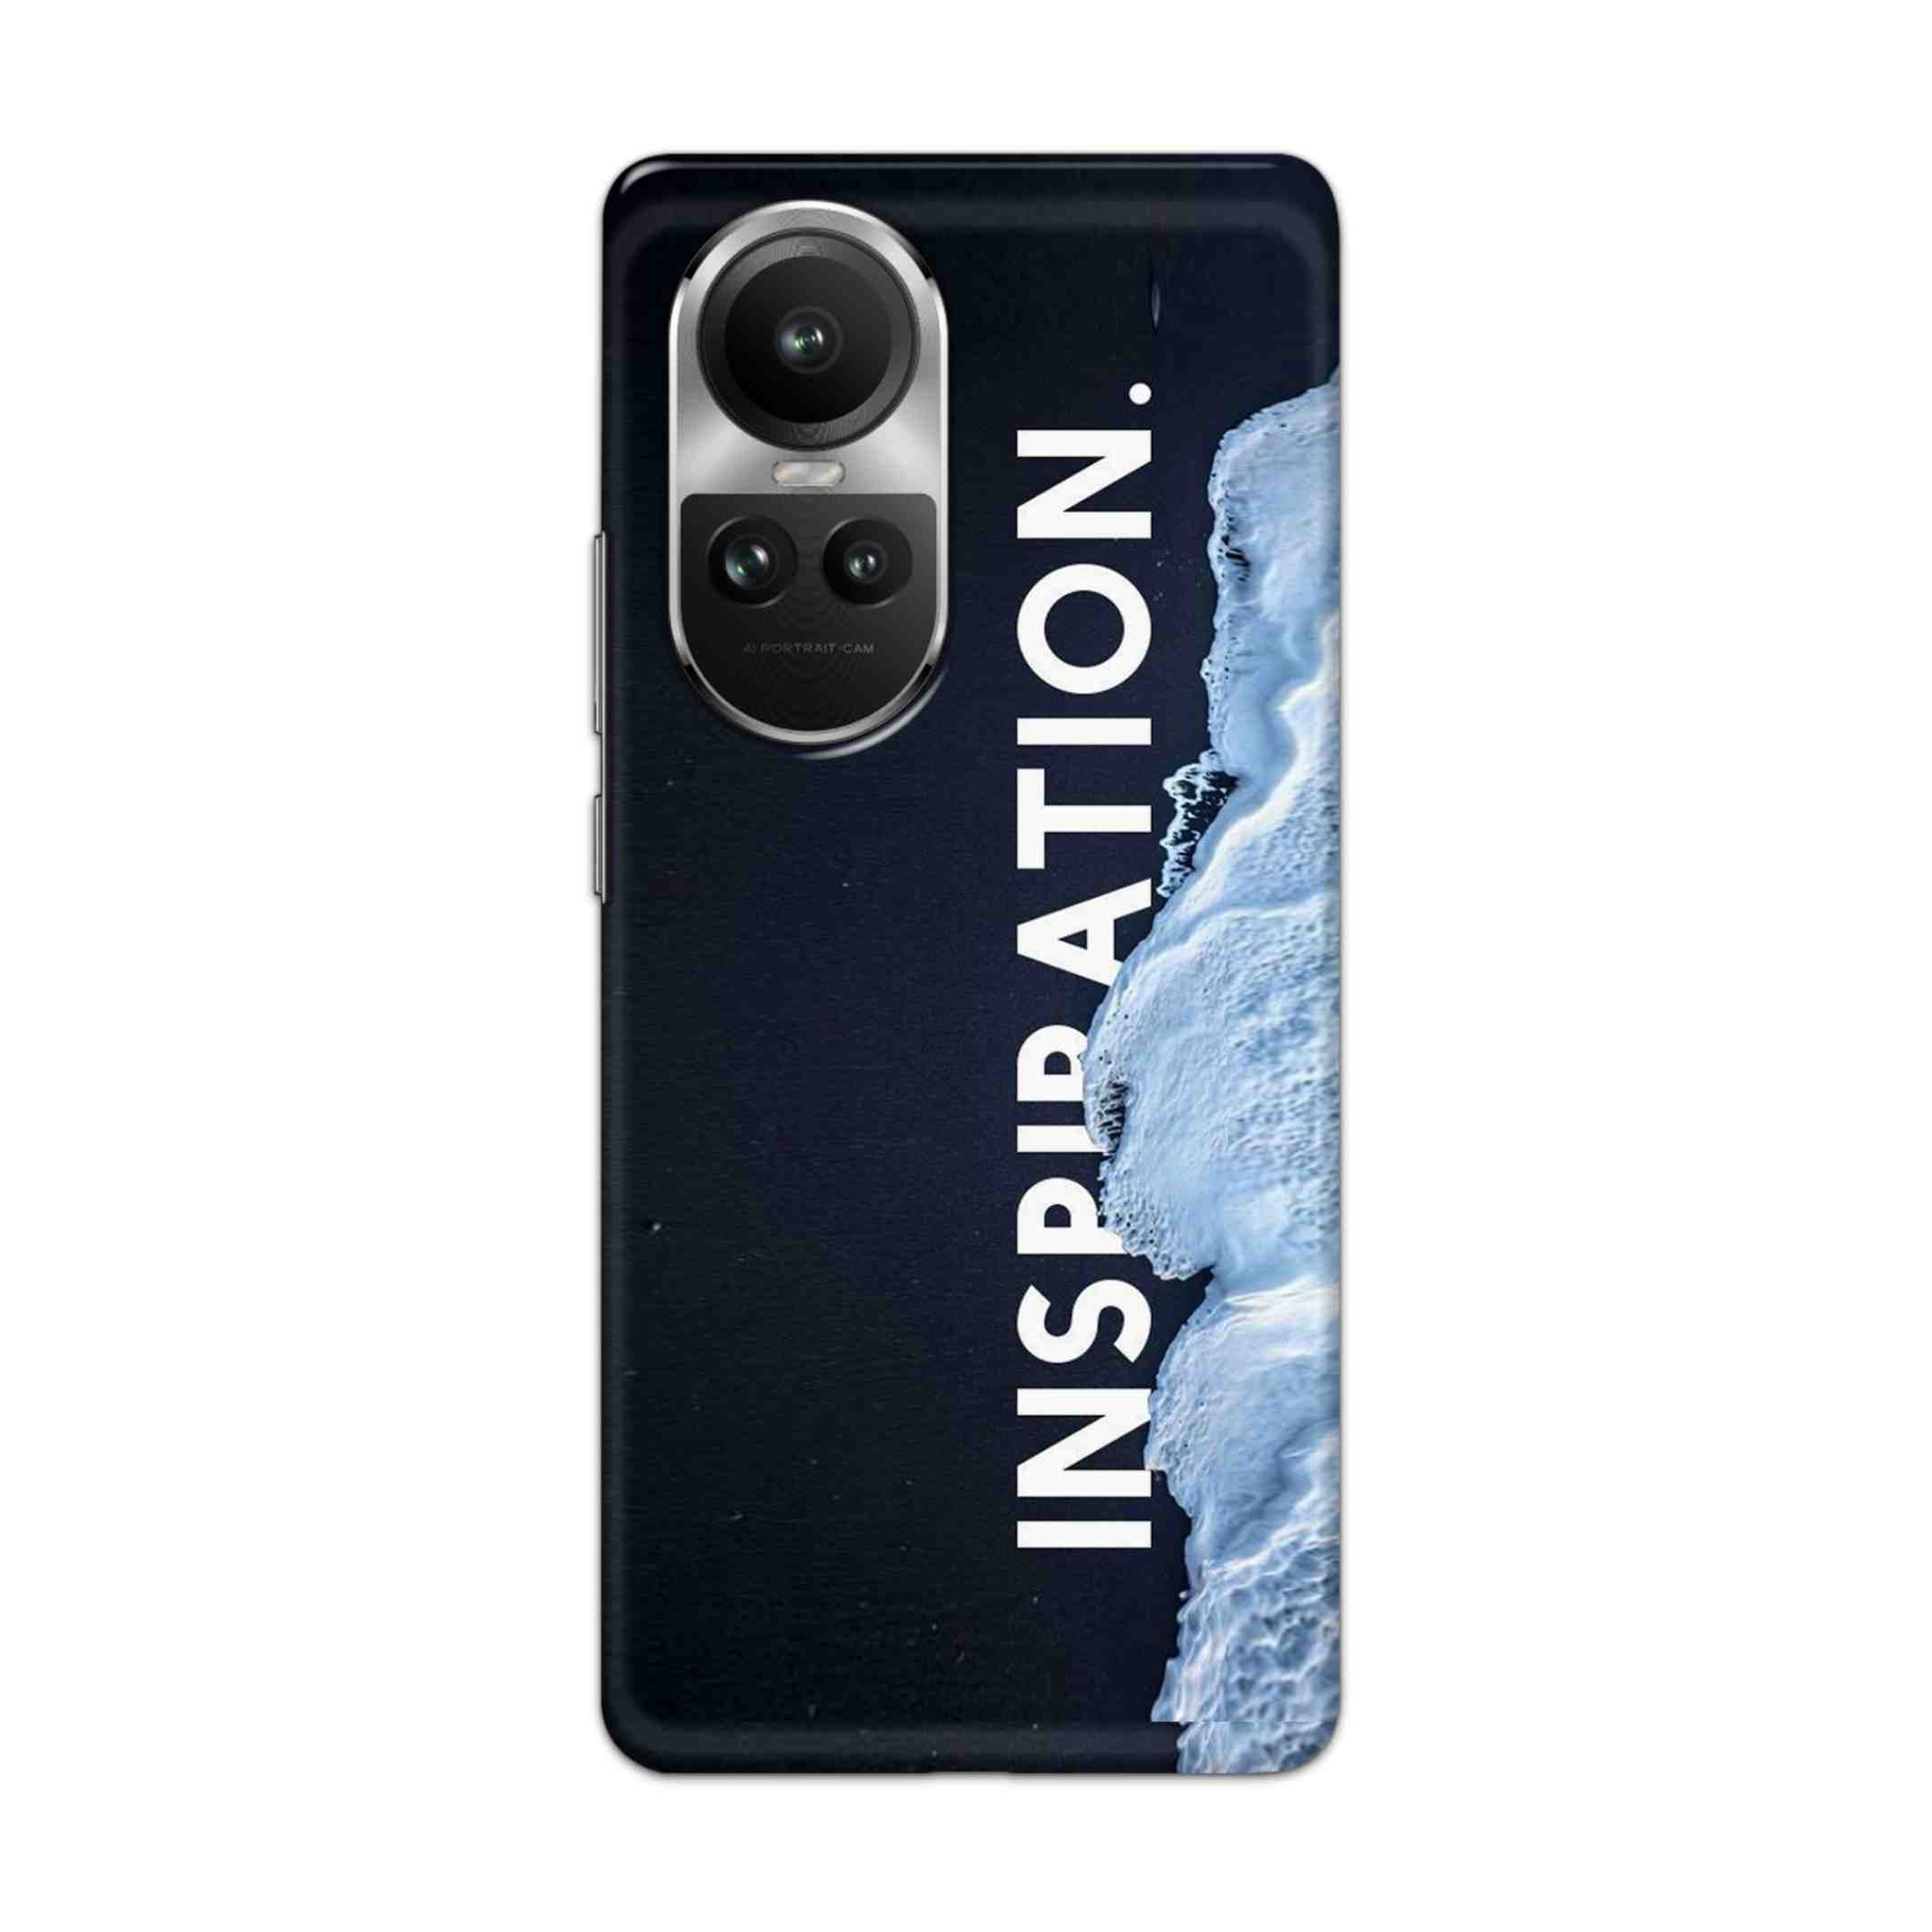 Buy Inspiration Hard Back Mobile Phone Case/Cover For Oppo Reno 10 5G Online